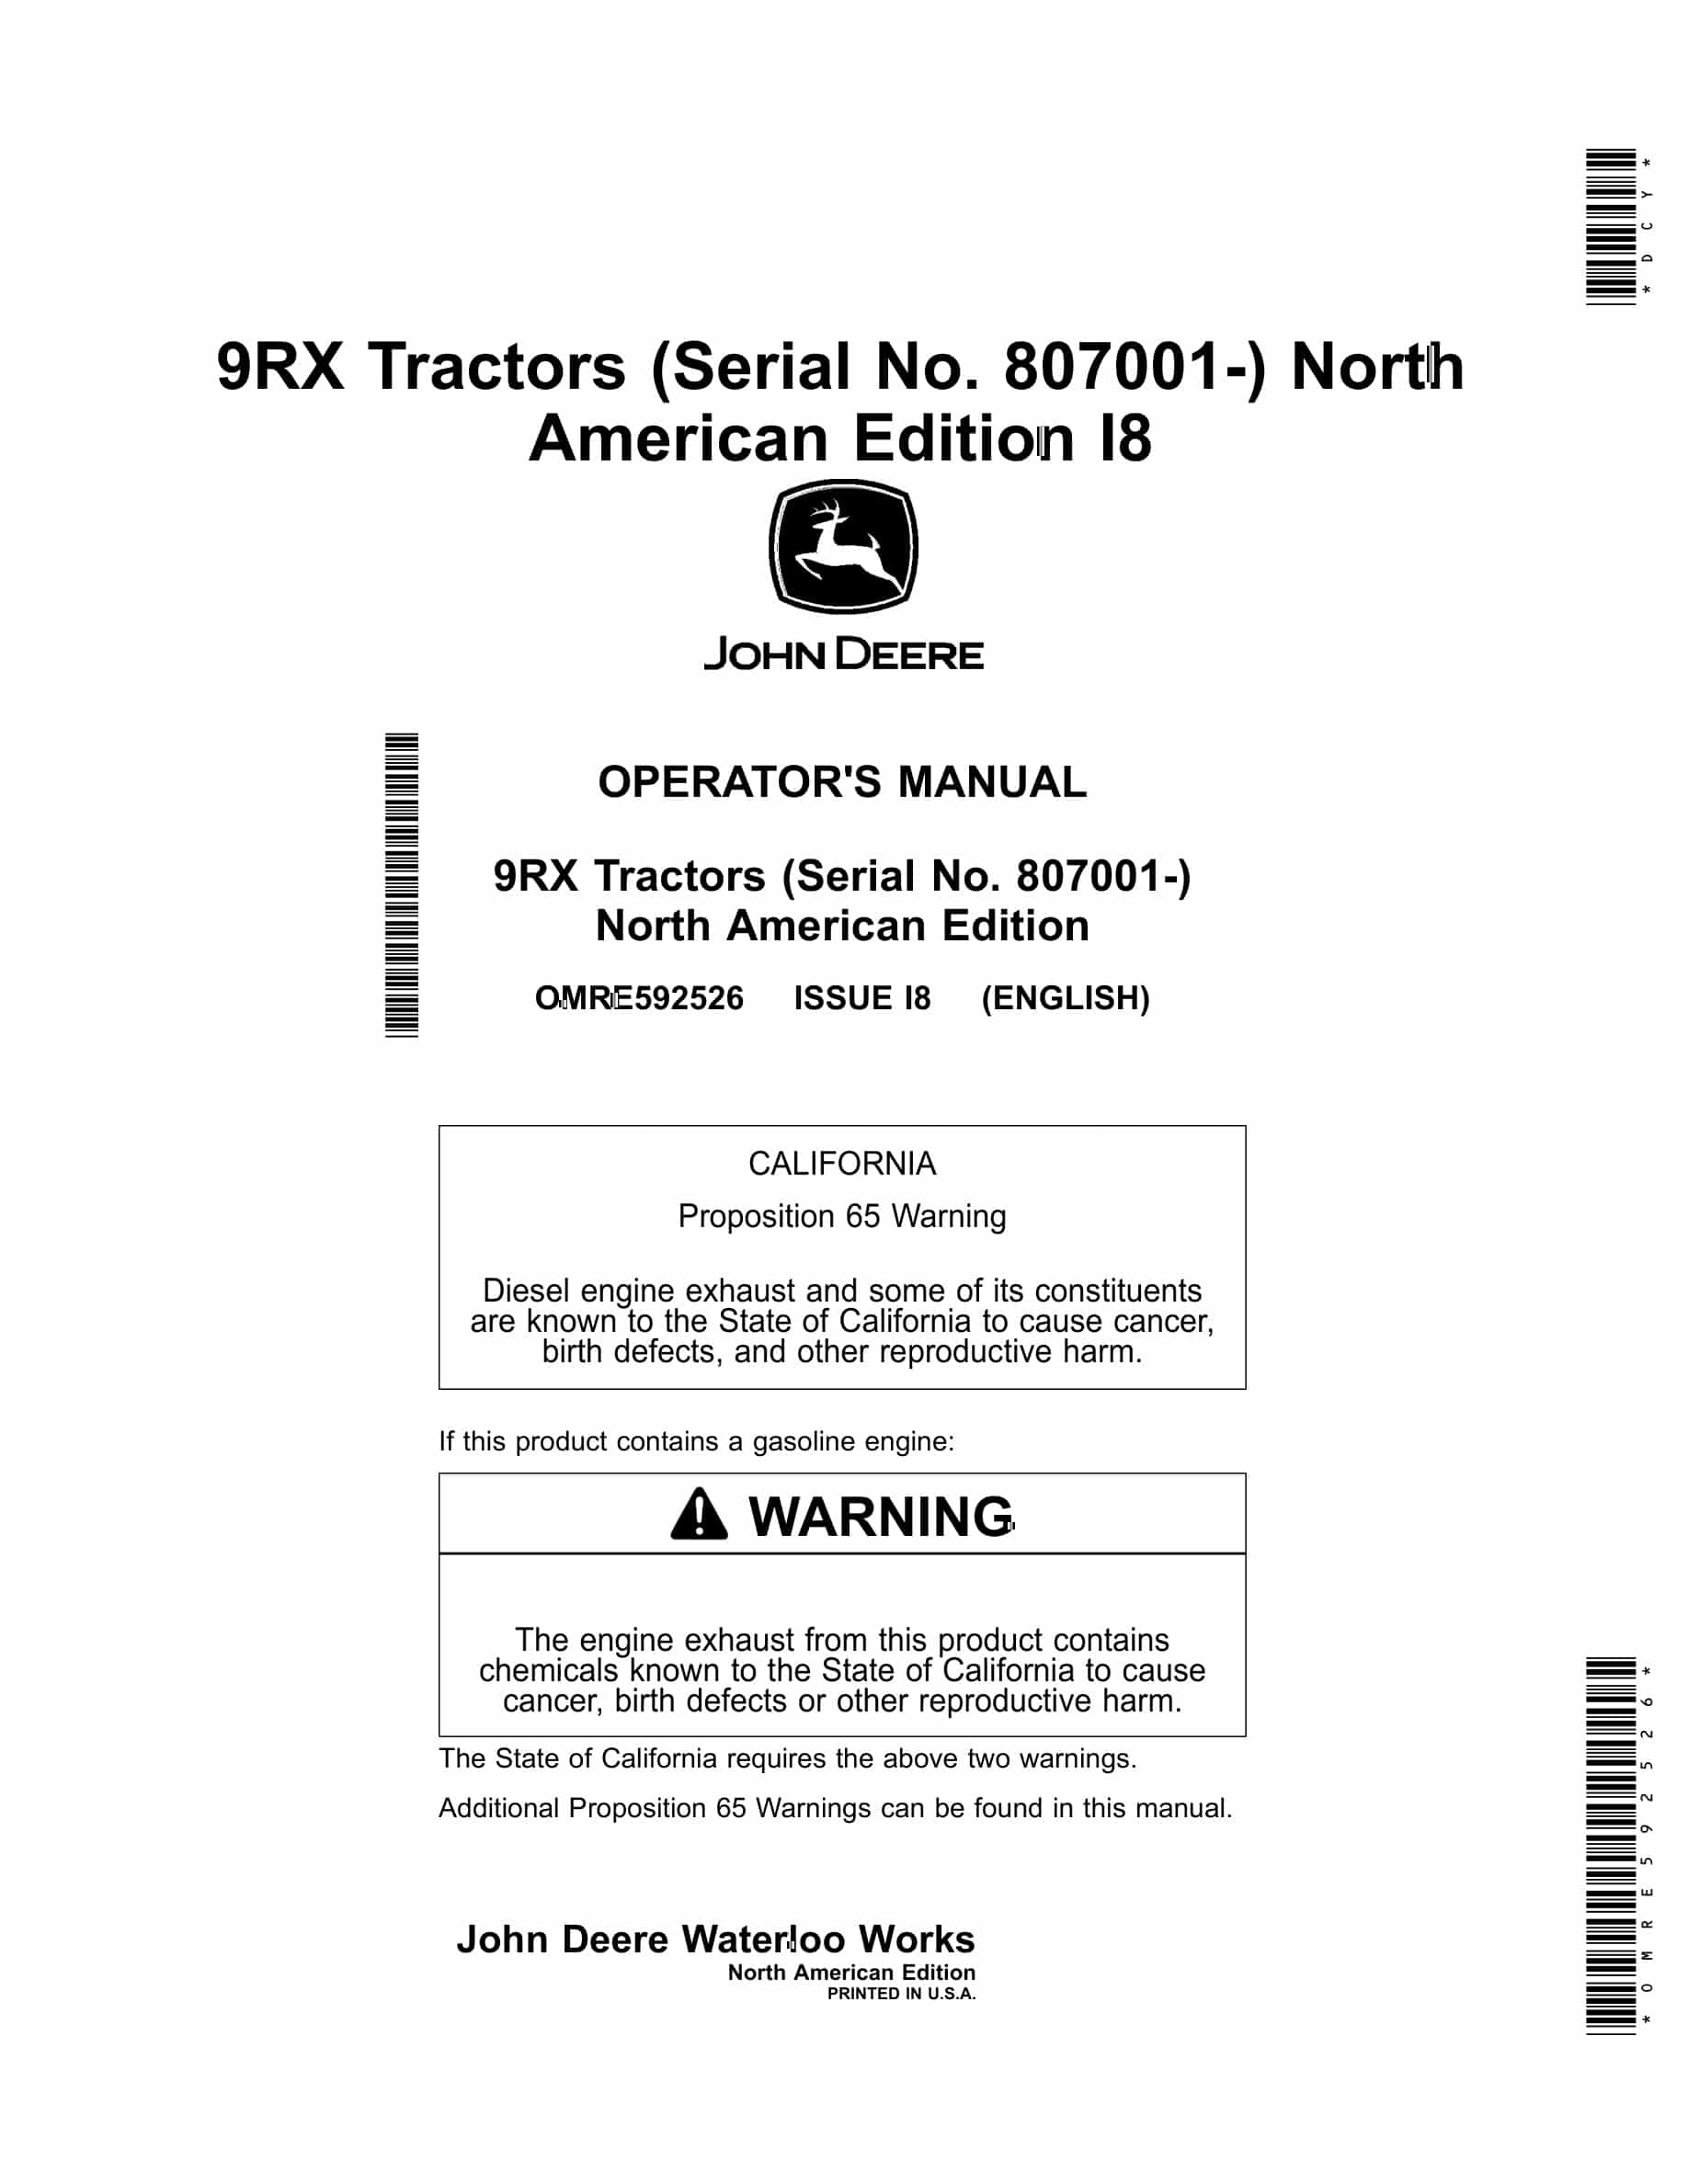 John Deere 9RX Tractor Operator Manual OMRE592526-1